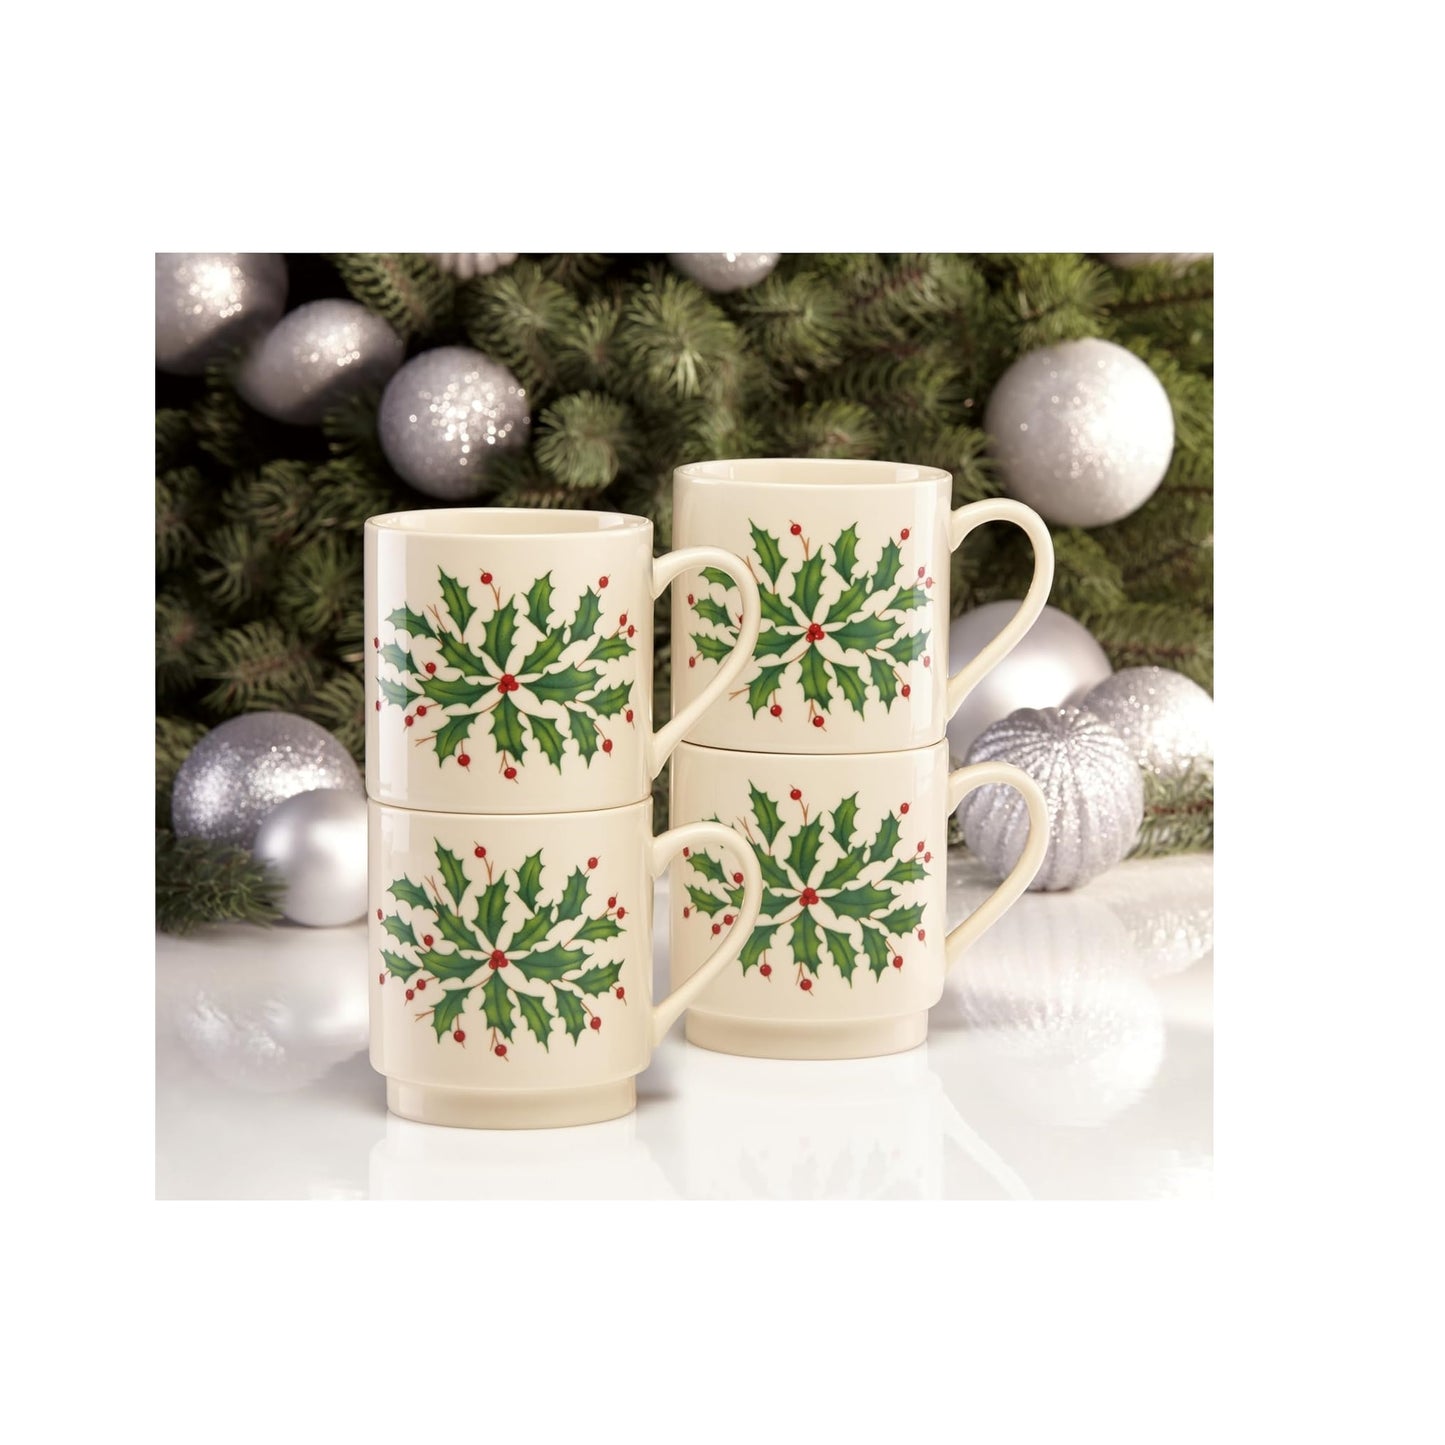 Hosting the Holidays Stacking Mug Set of 4 by Lenox